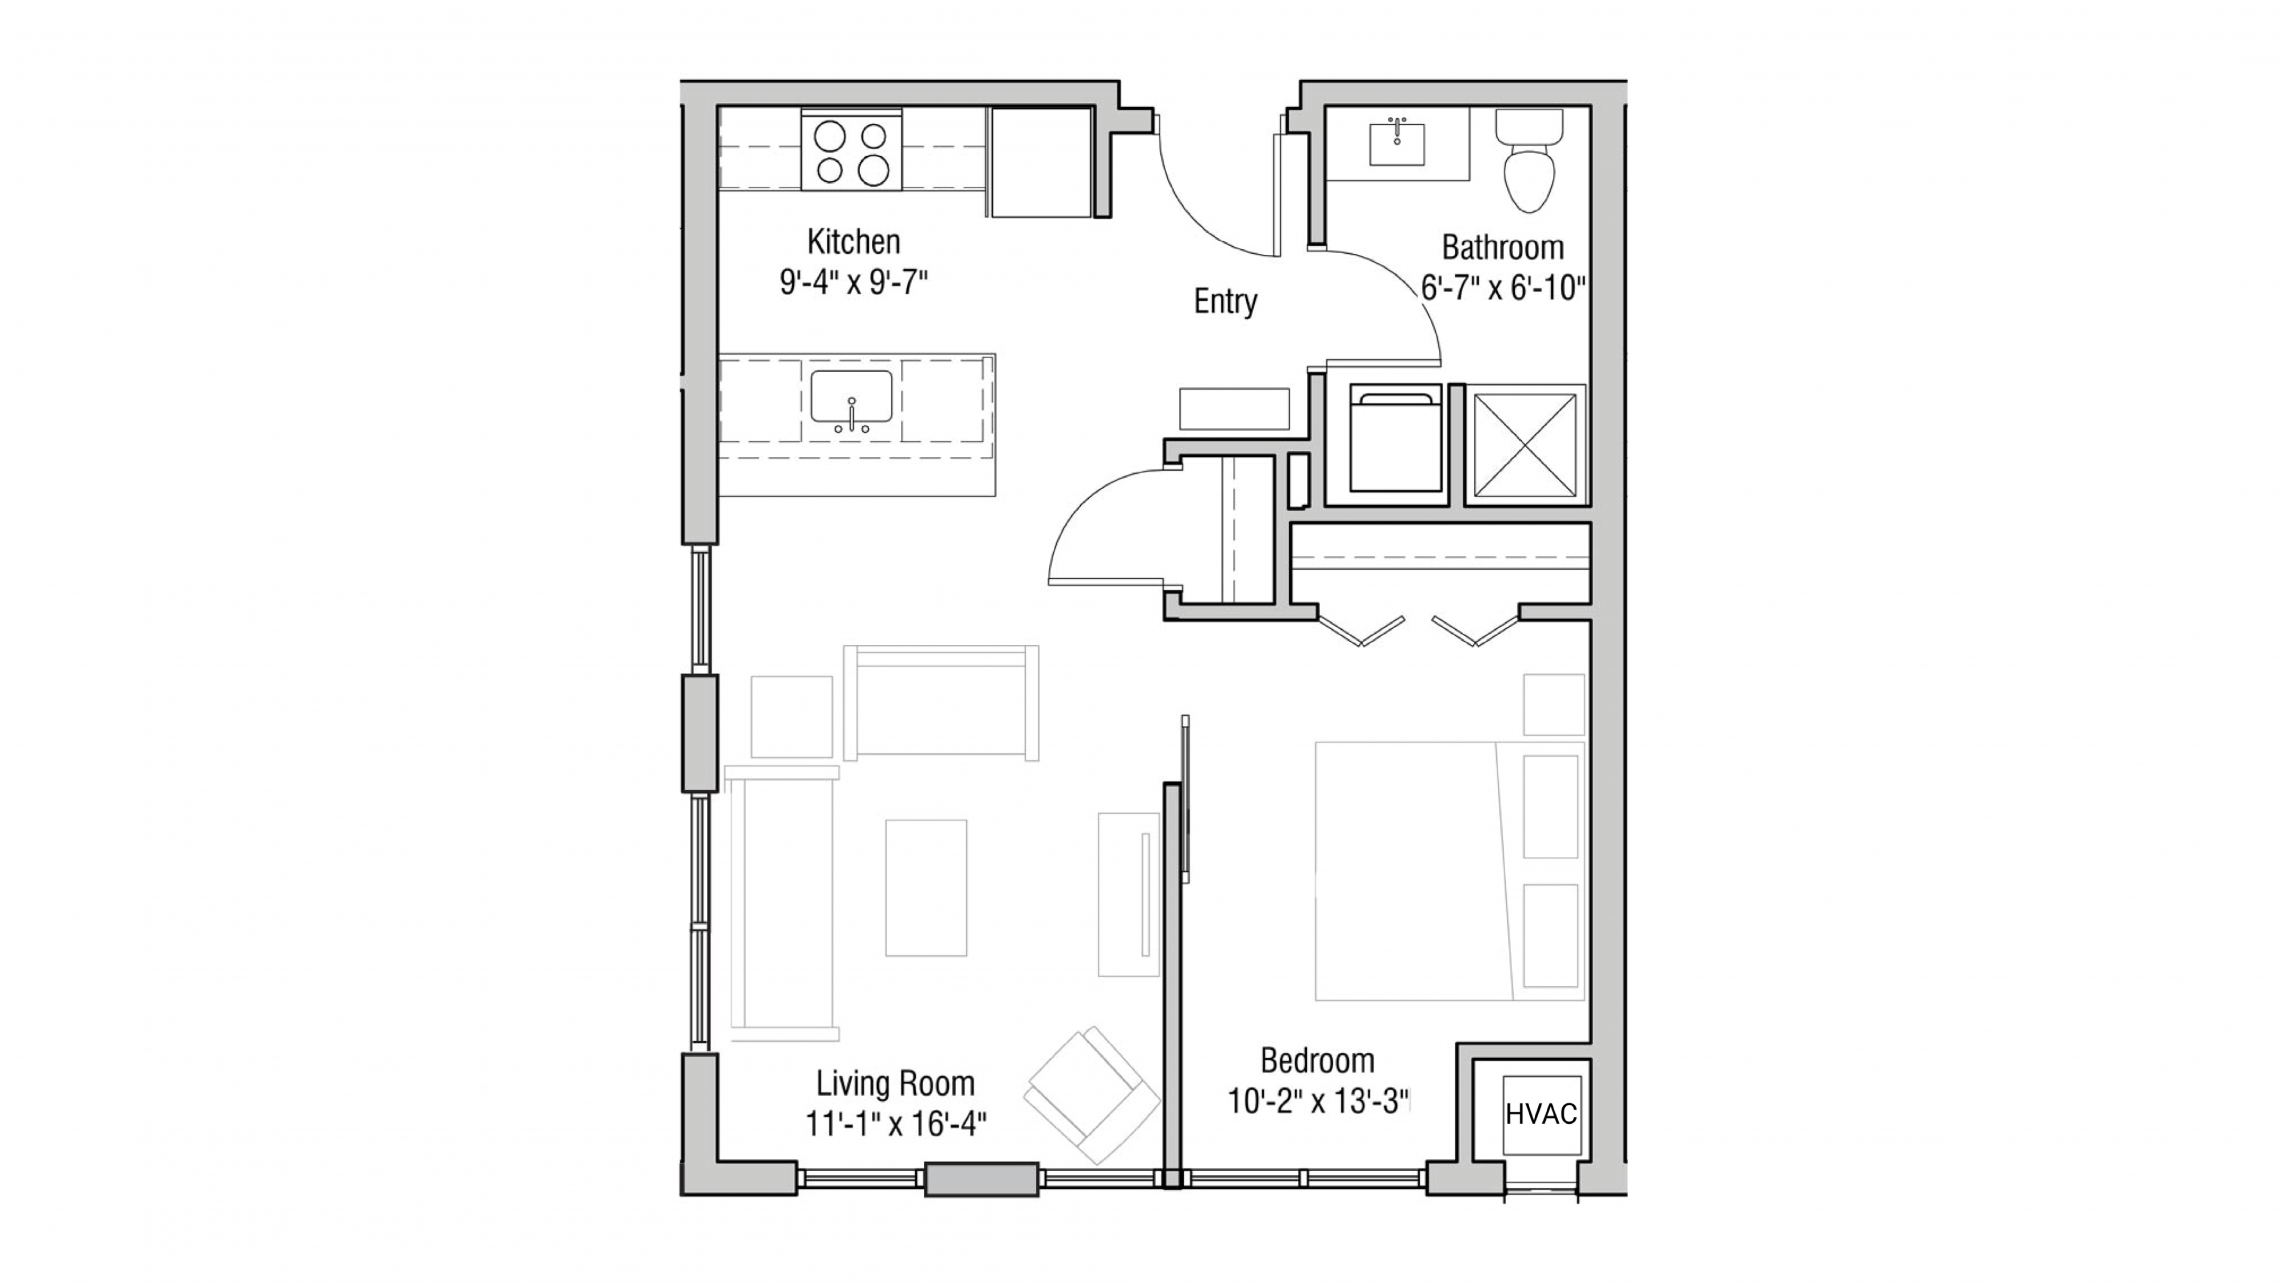 ULI Quarter Row Apartments - Unit 326 - One Bedroom, One Bathroom